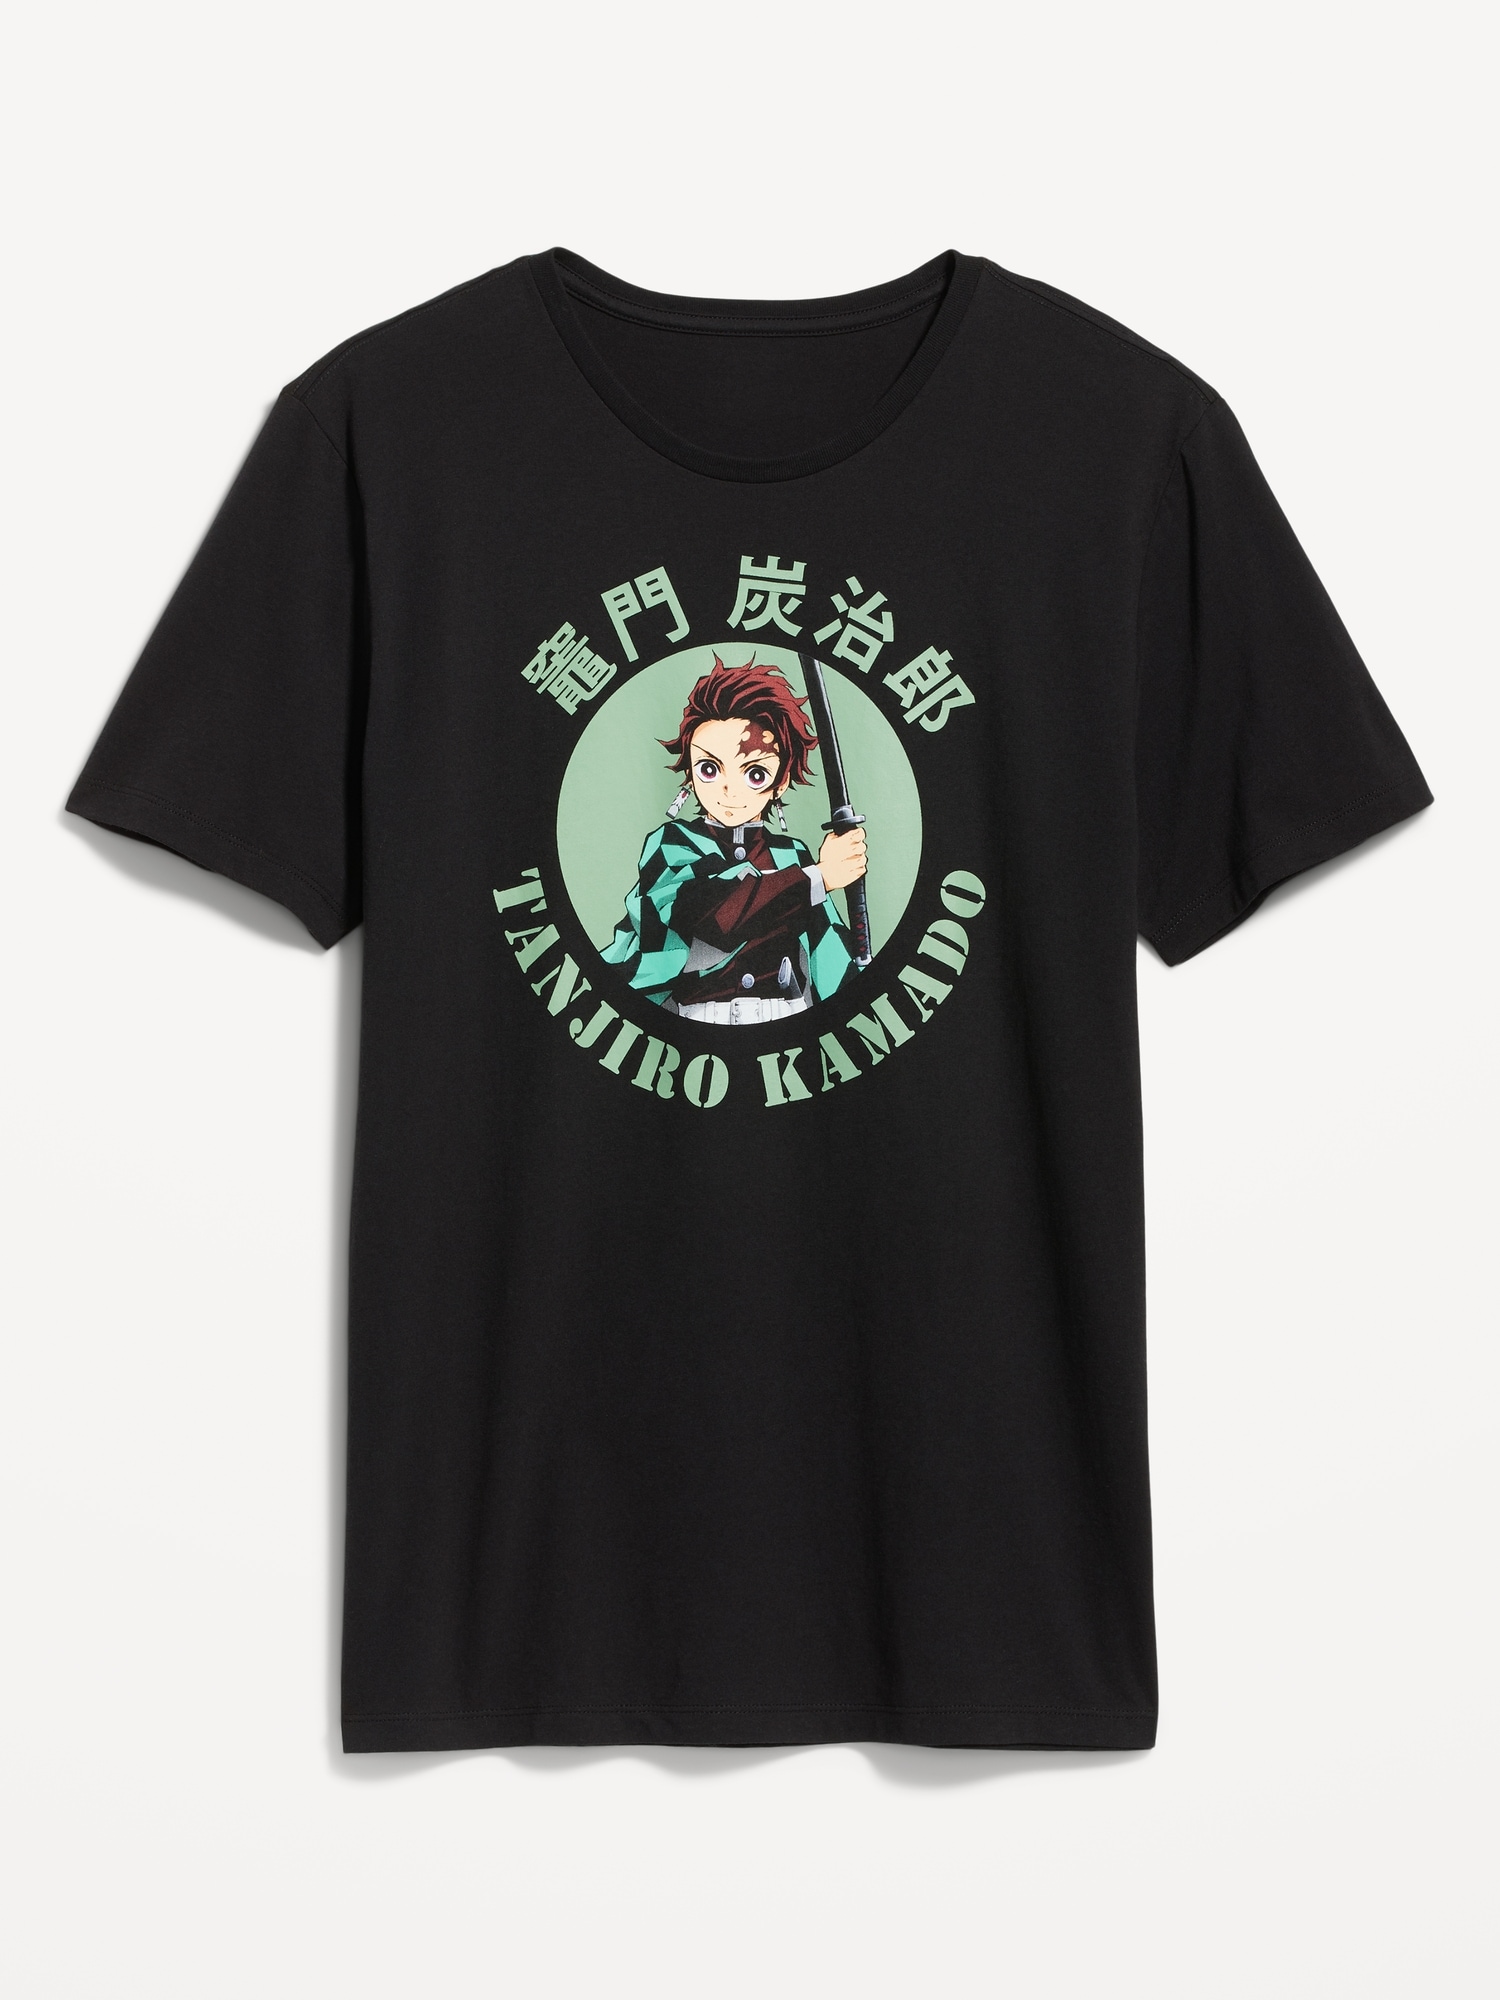 Demon Slayer: Kimetsu No Yaiba™ Gender-Neutral T-Shirt for Adults